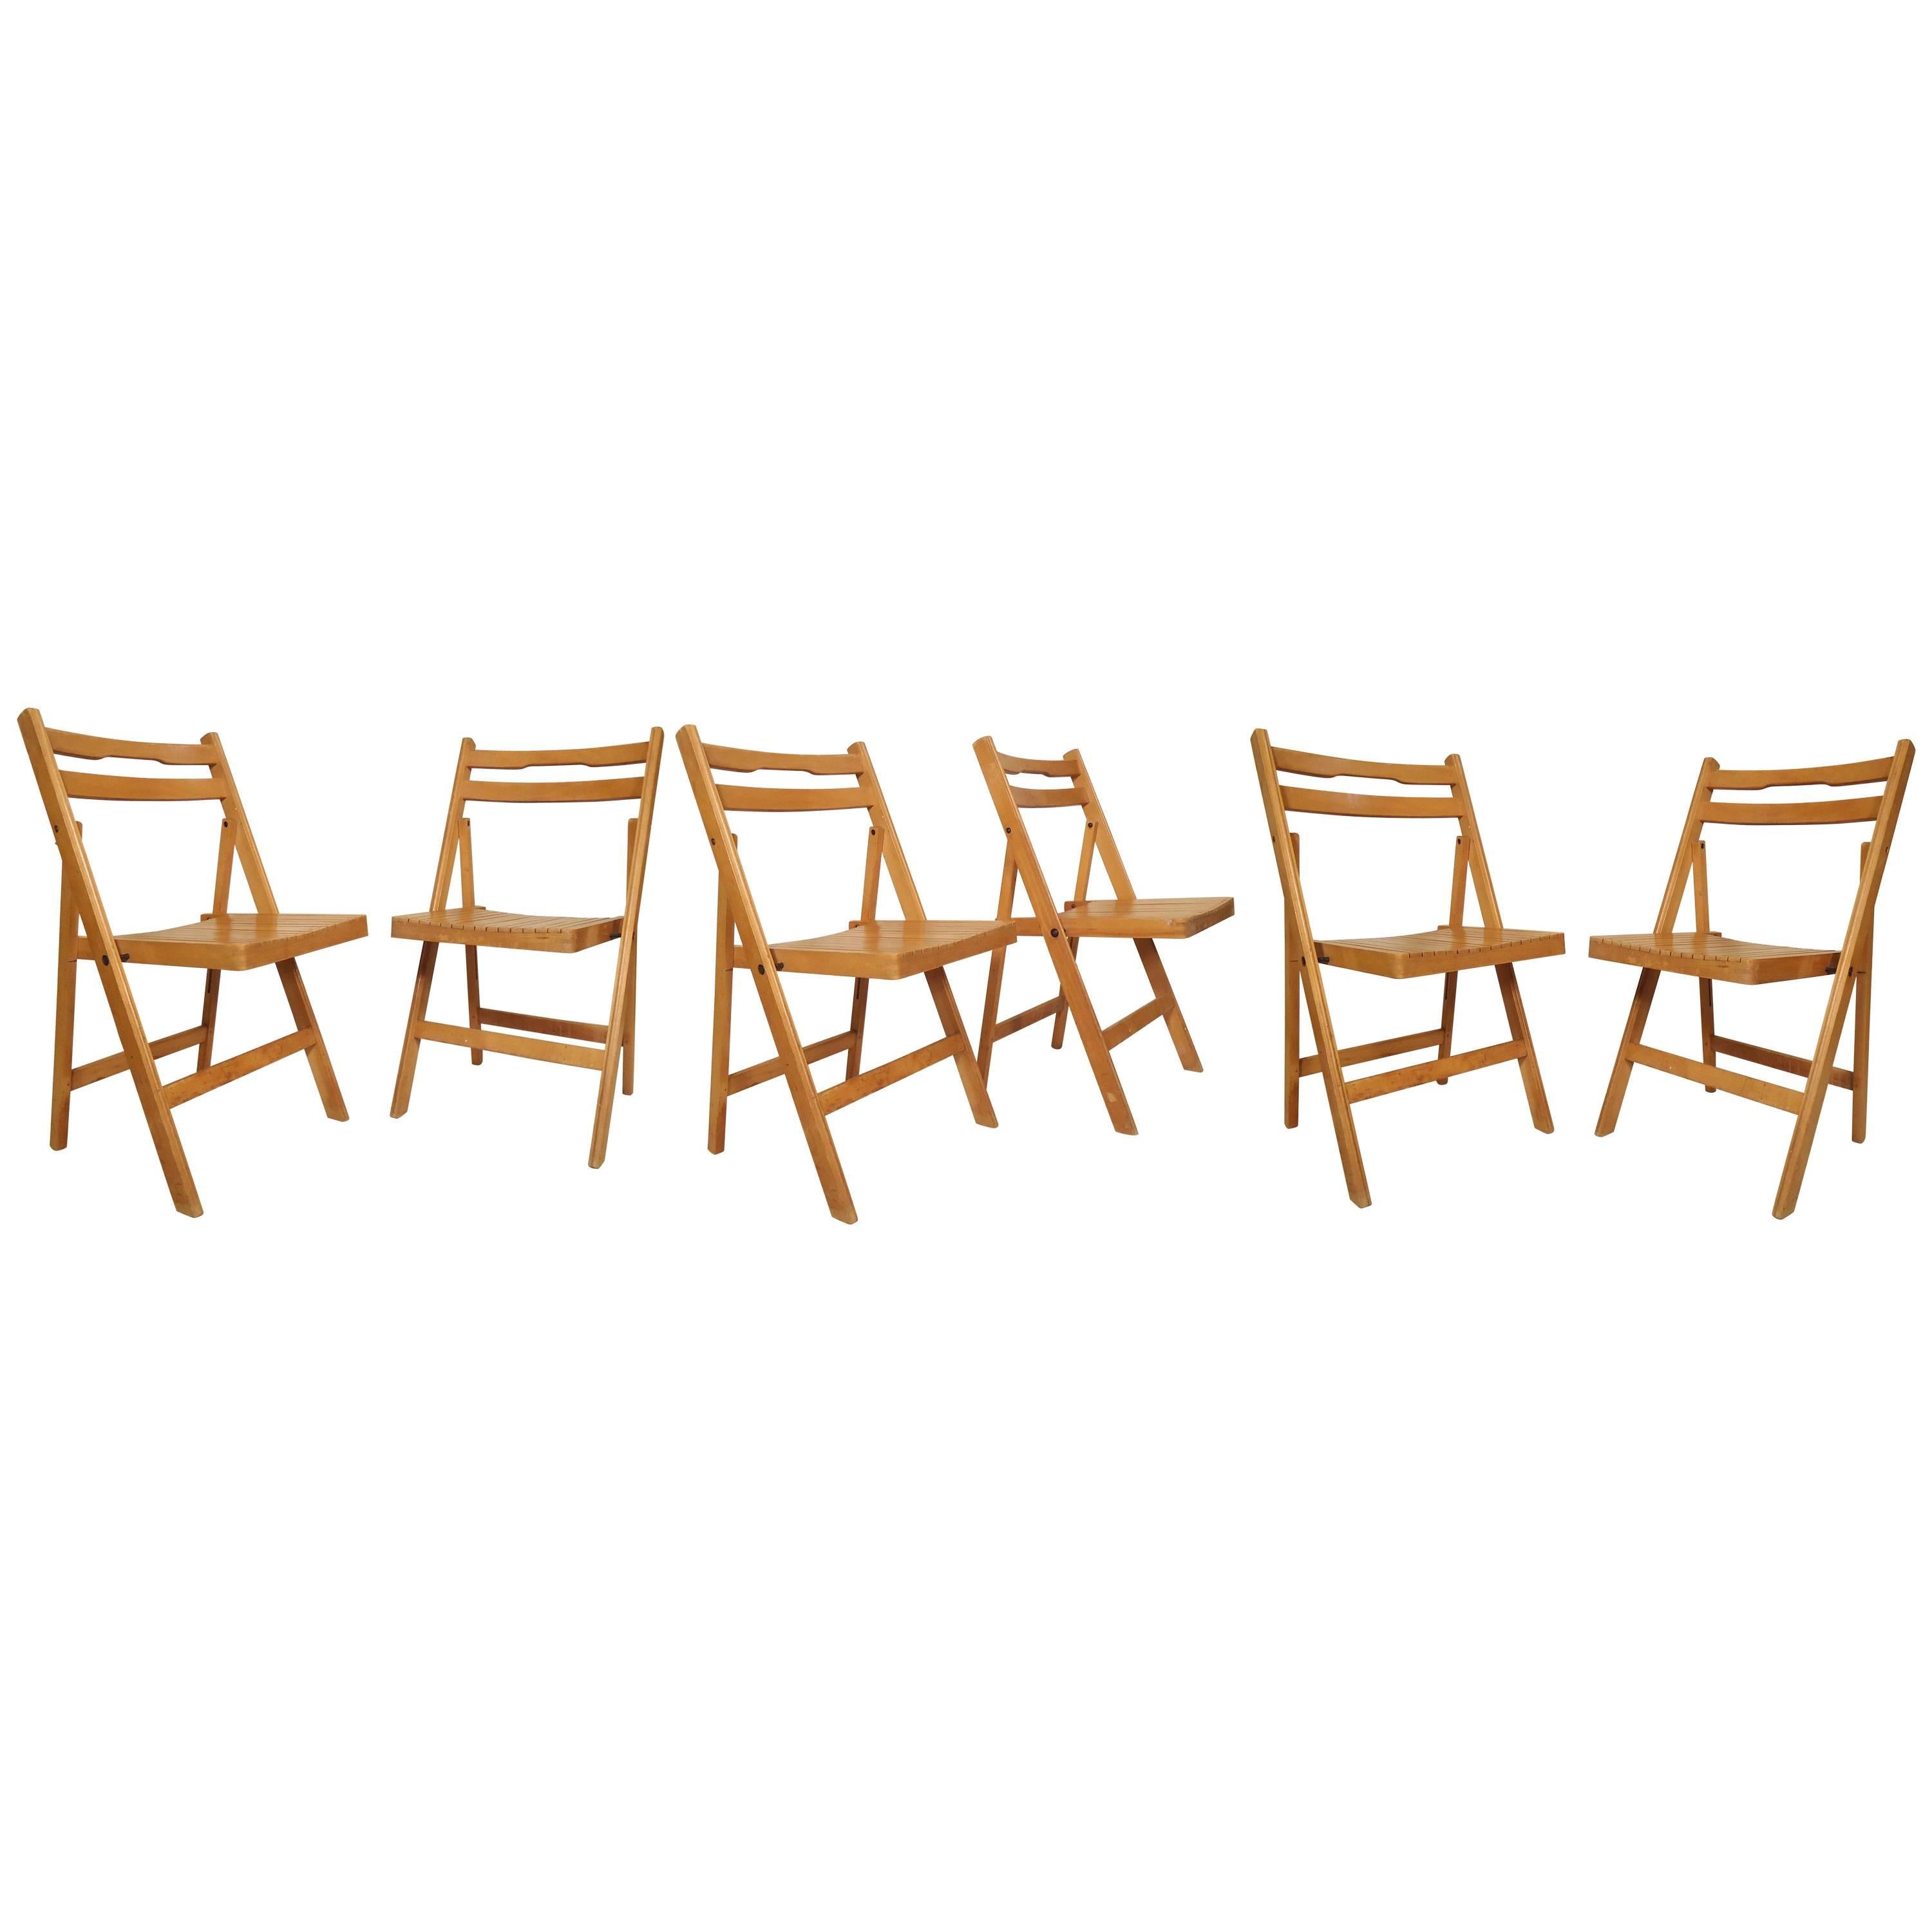 Six Vintage Folding Chairs